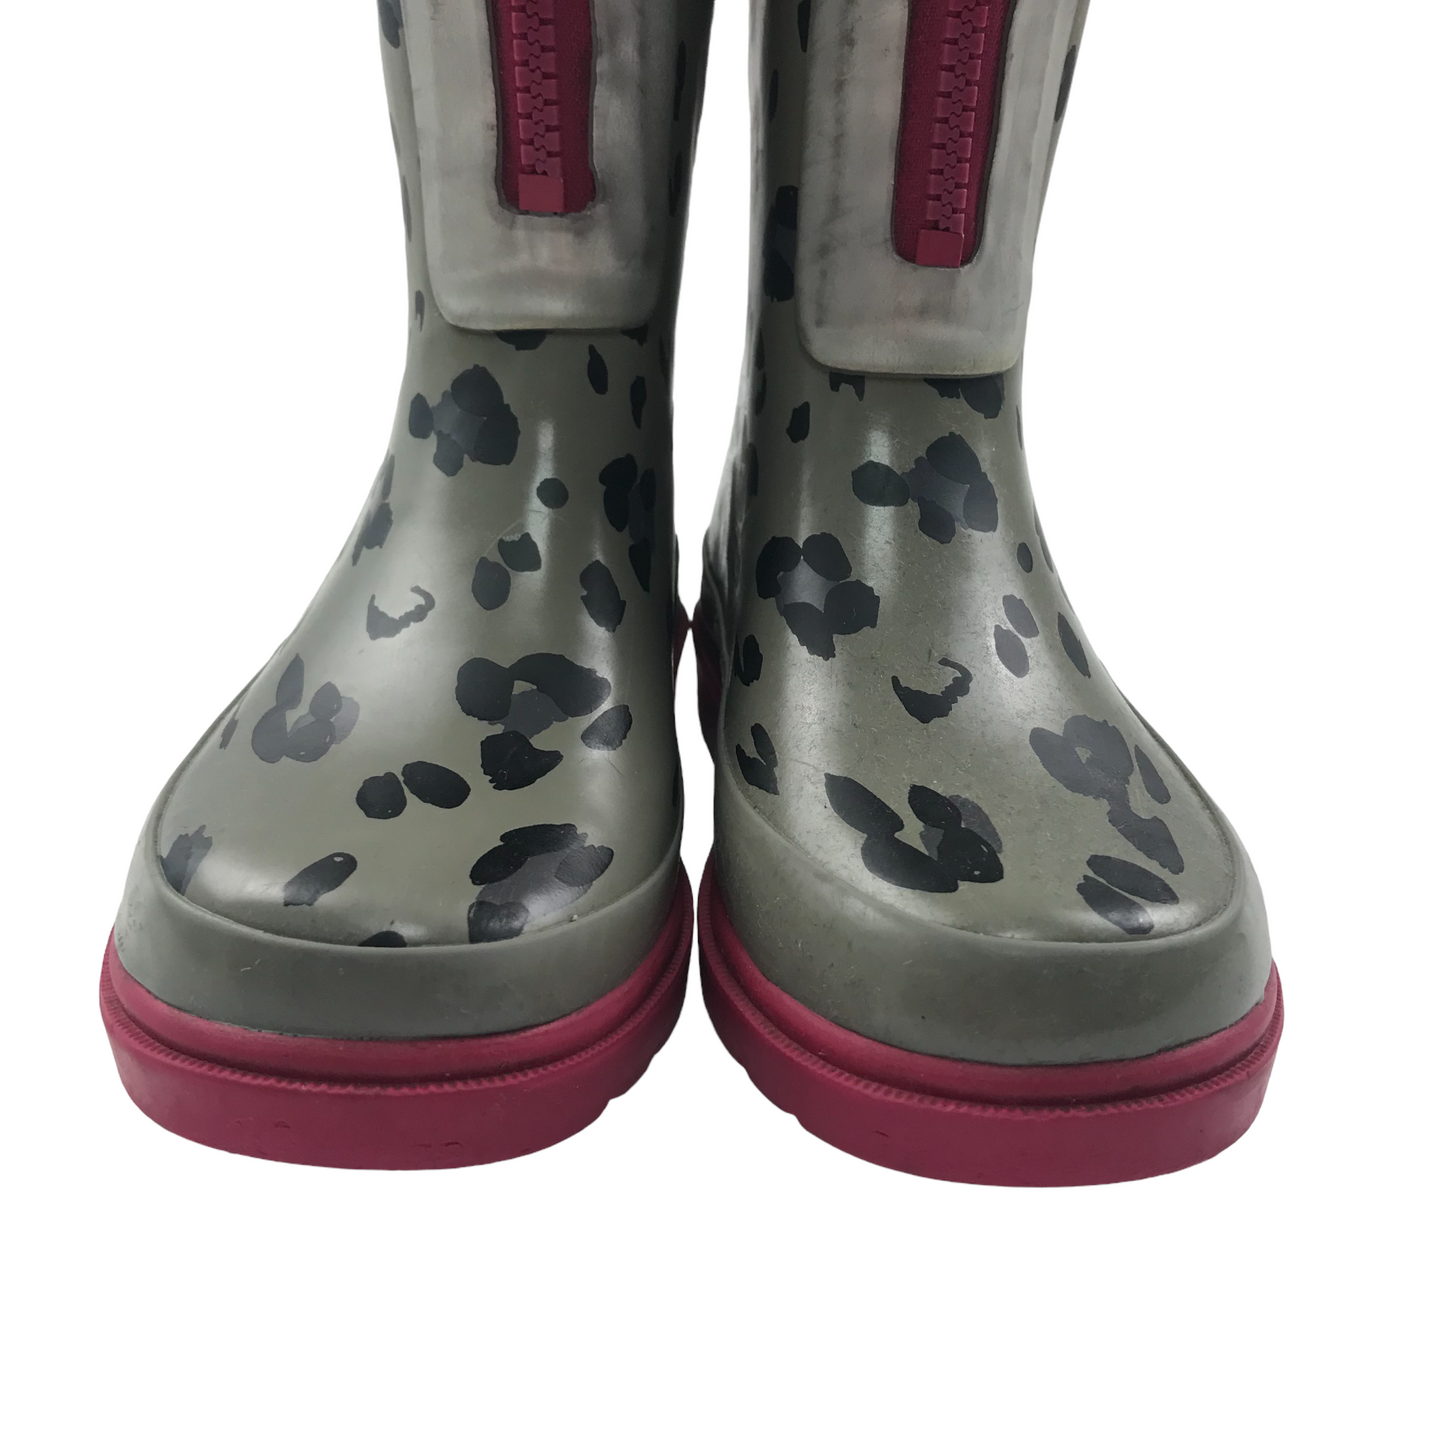 Tu Grey Leopard Print Wellies Shoe Size 10 junior